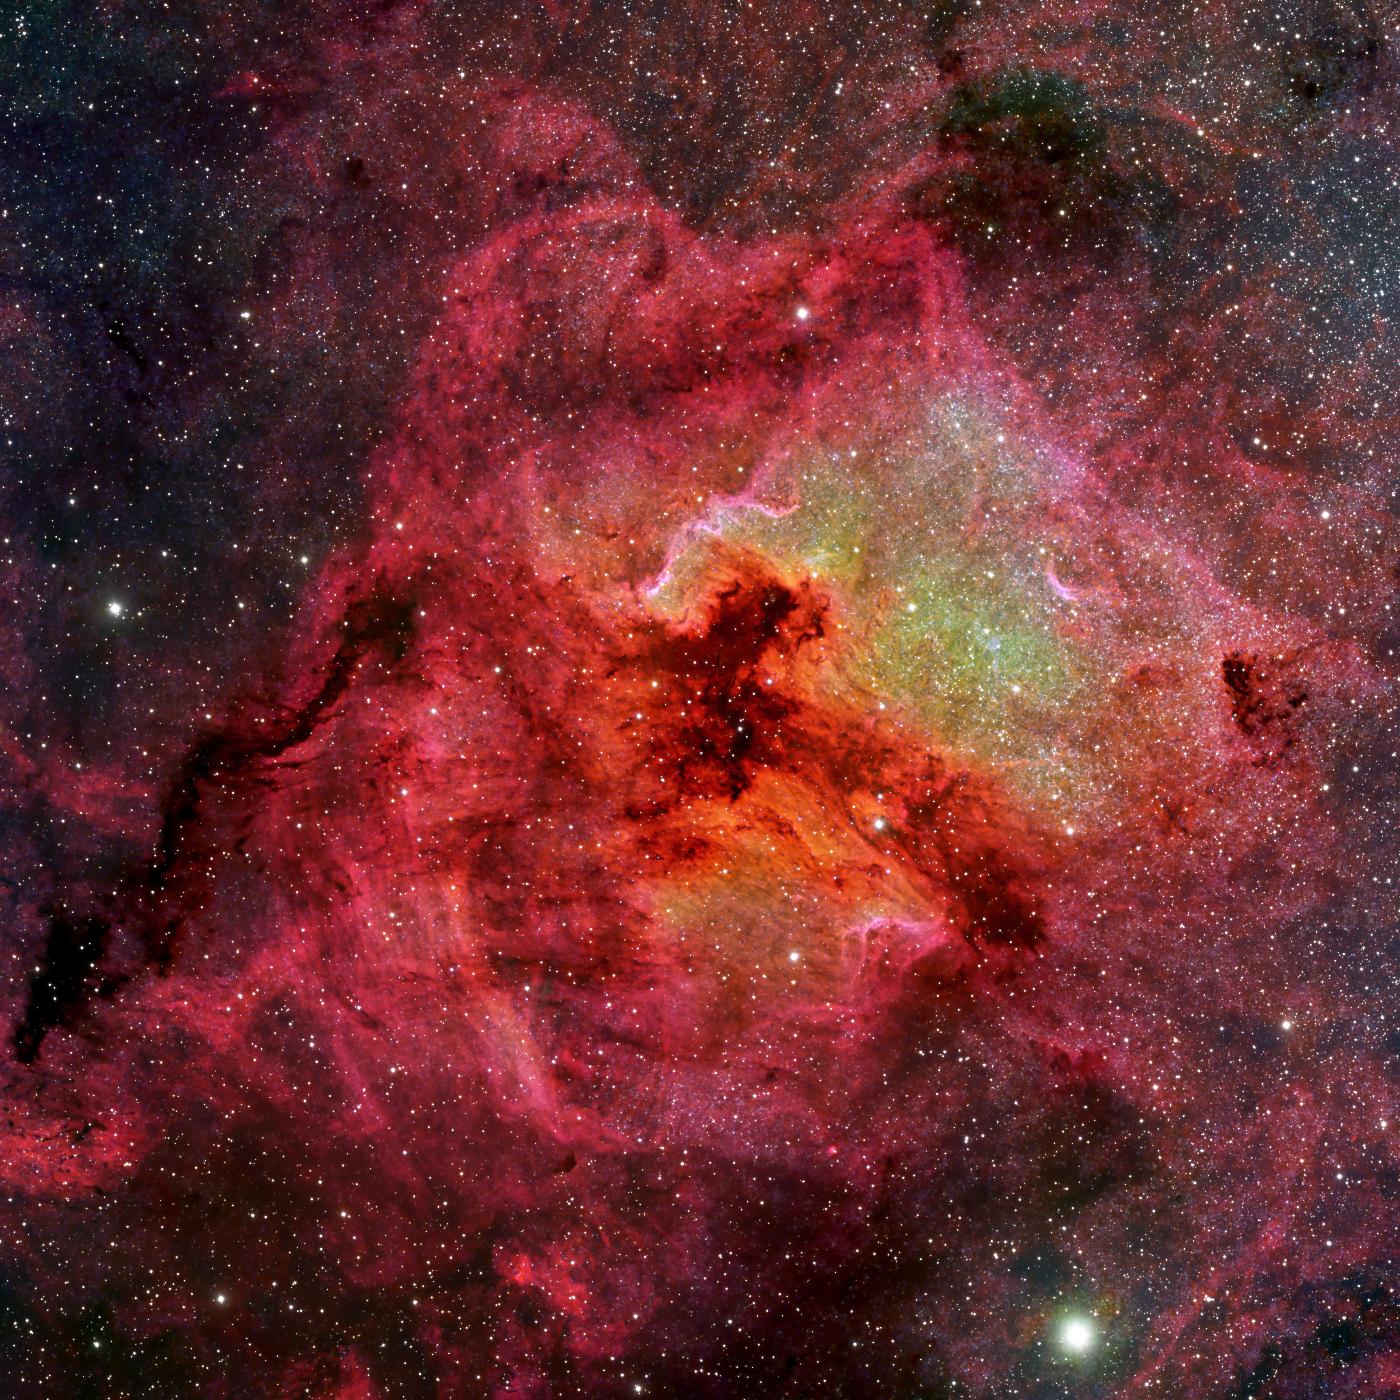 SH2-117 (North America Nebula and the Pelican Nebula) in H-alpha and continuum